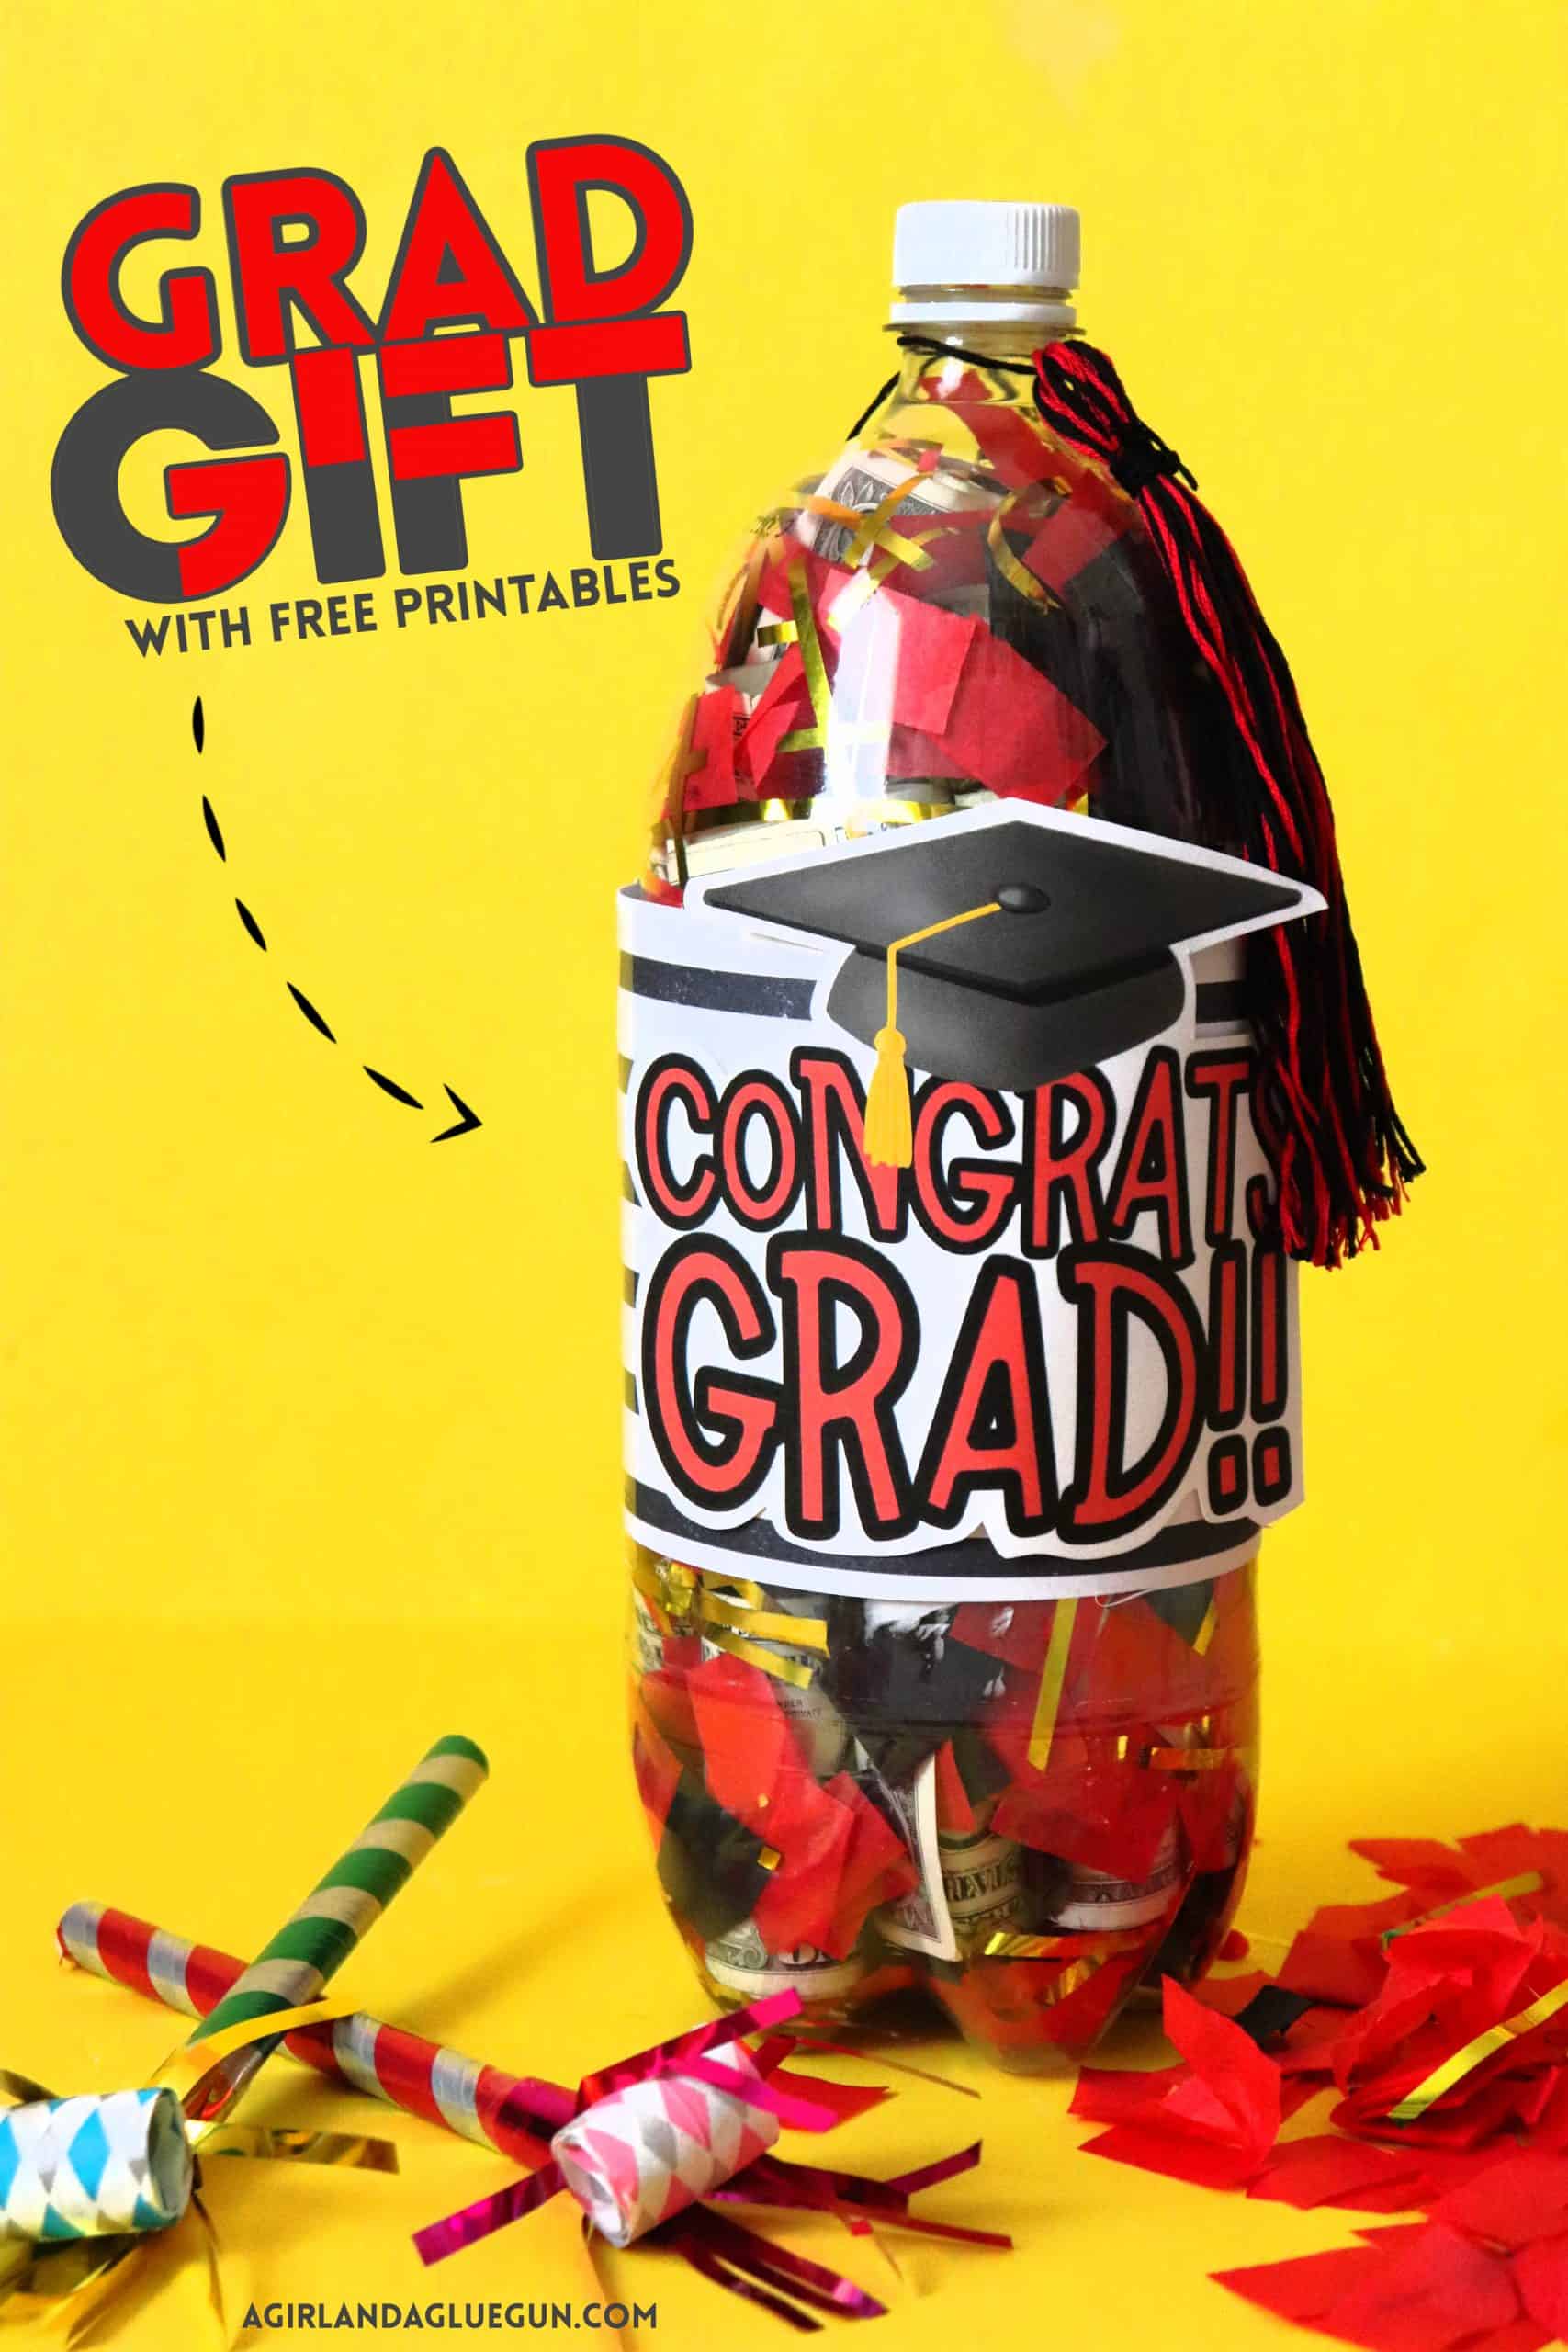 50 Fabulous Senior Gift Ideas for High School Graduation - Edible® Blog